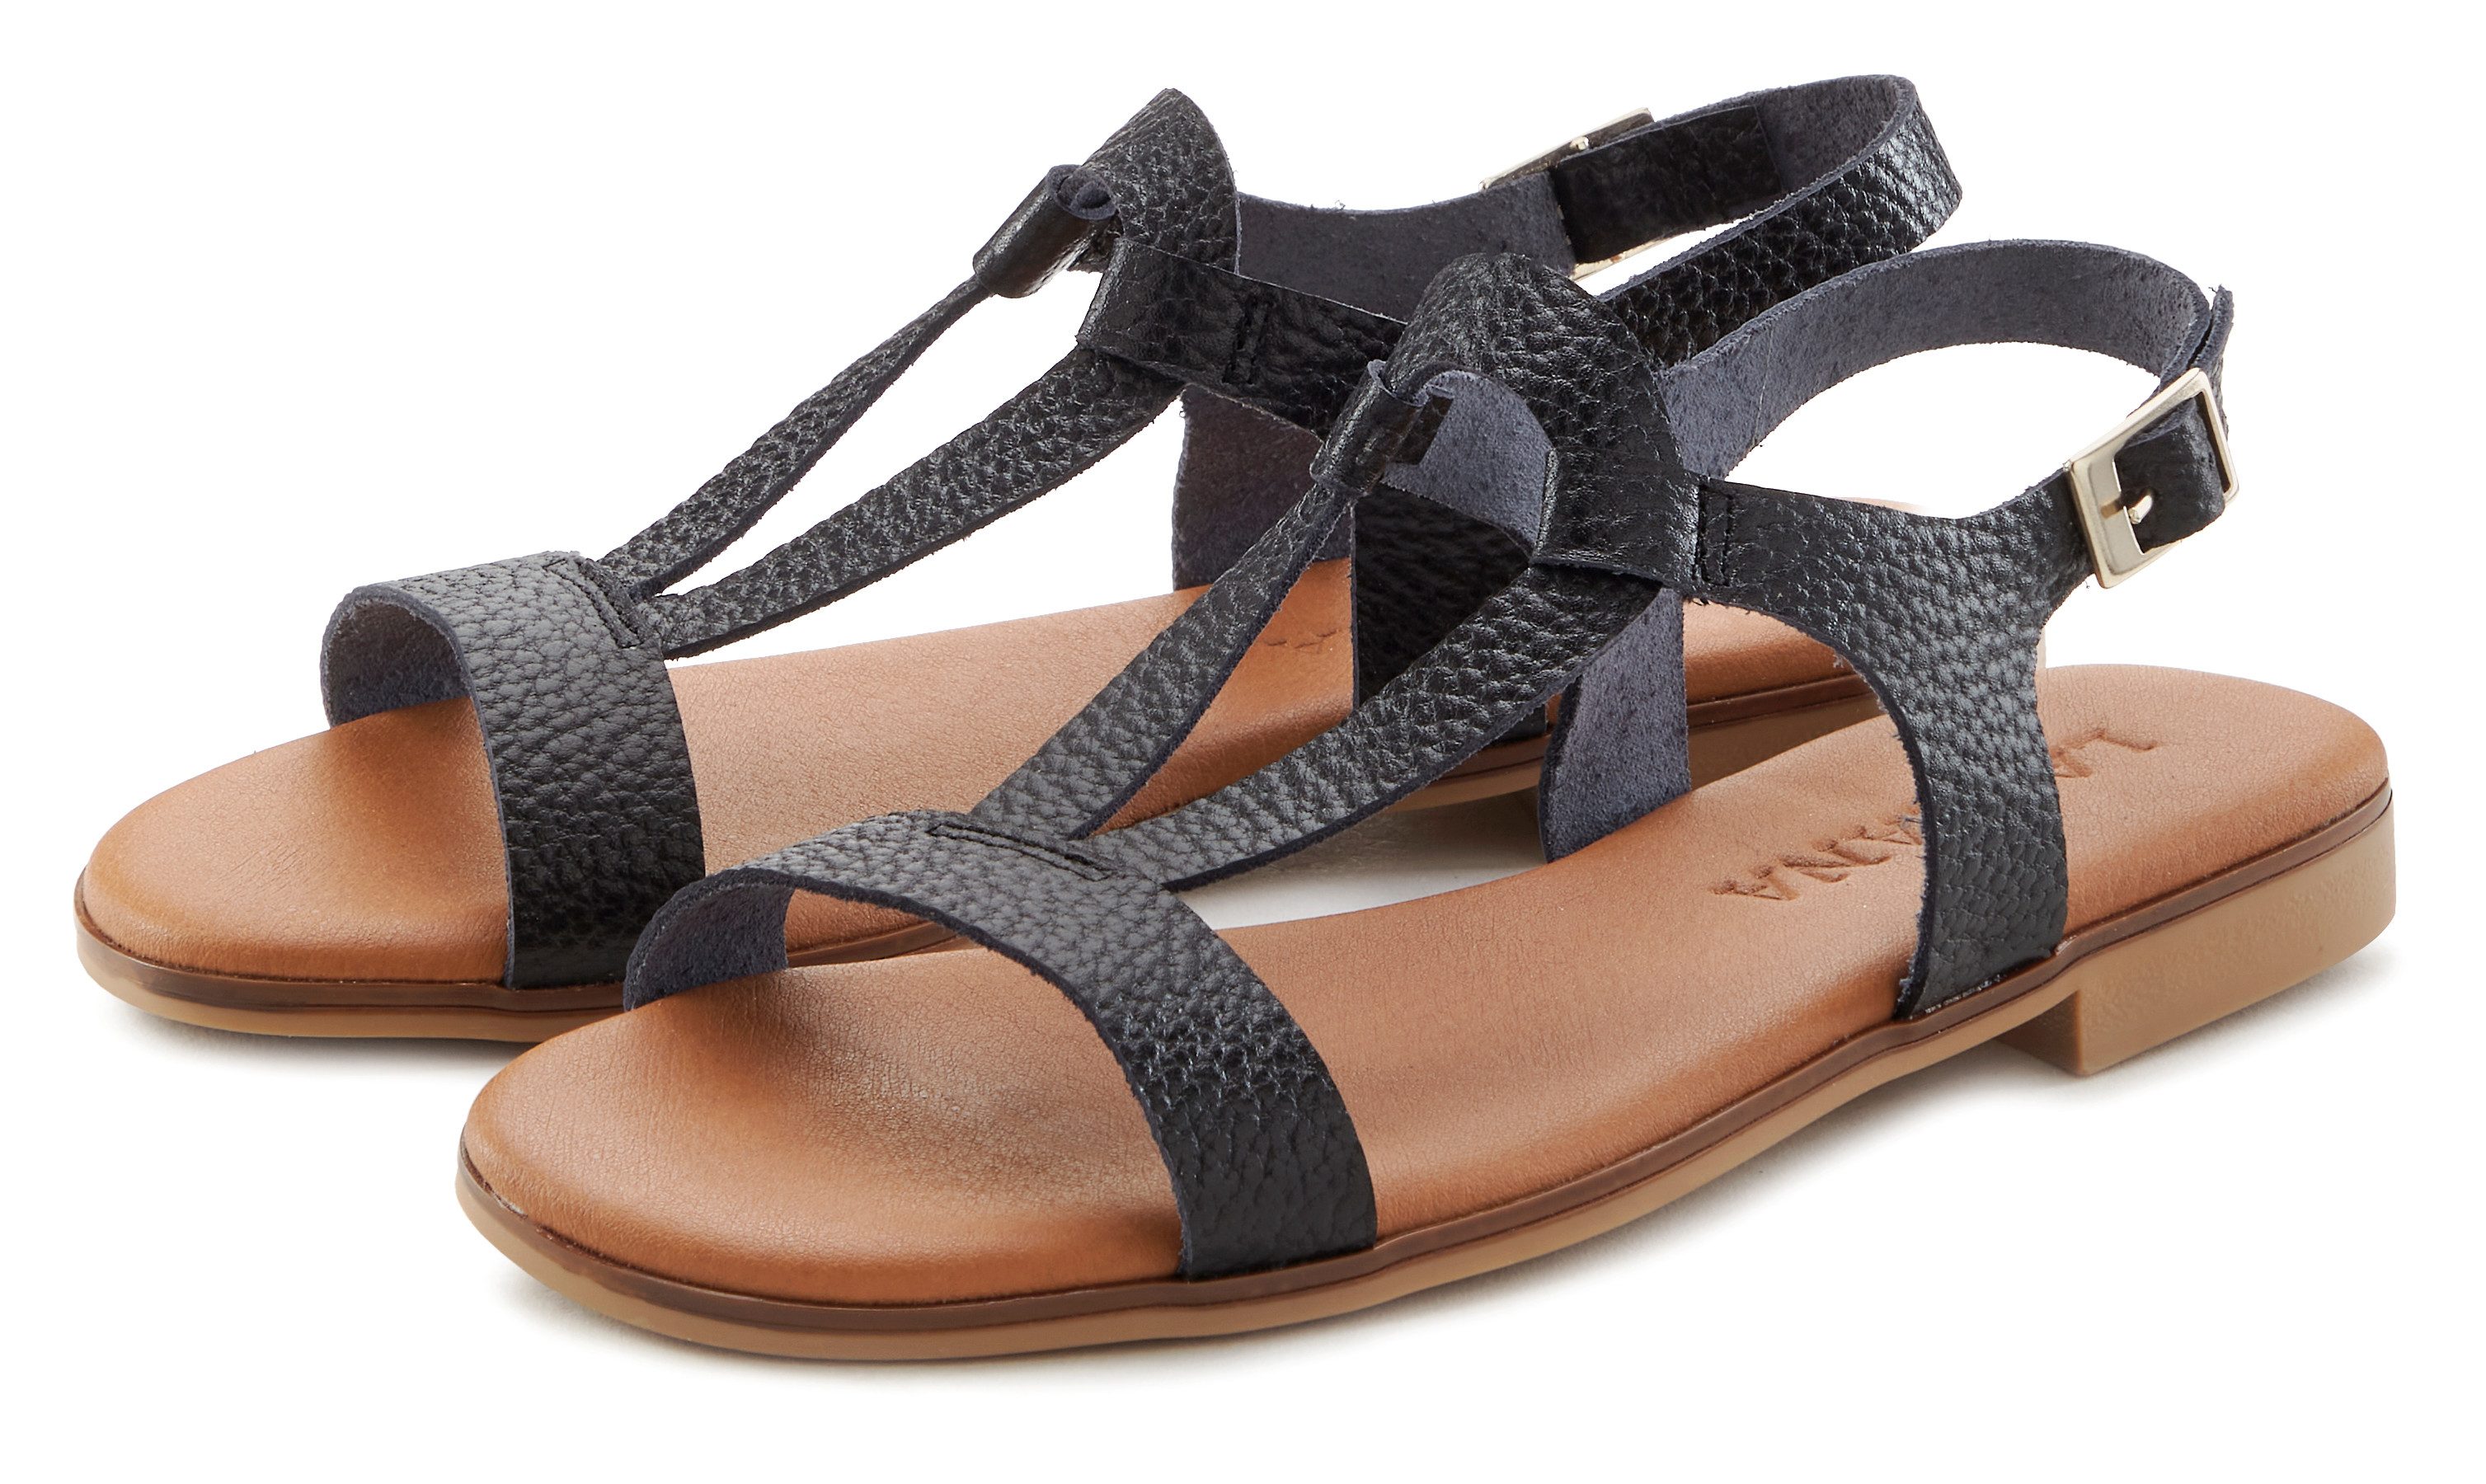 LASCANA Sandale Sandalette, Sommerschuh aus hochwertigem Leder im Metallic-Look